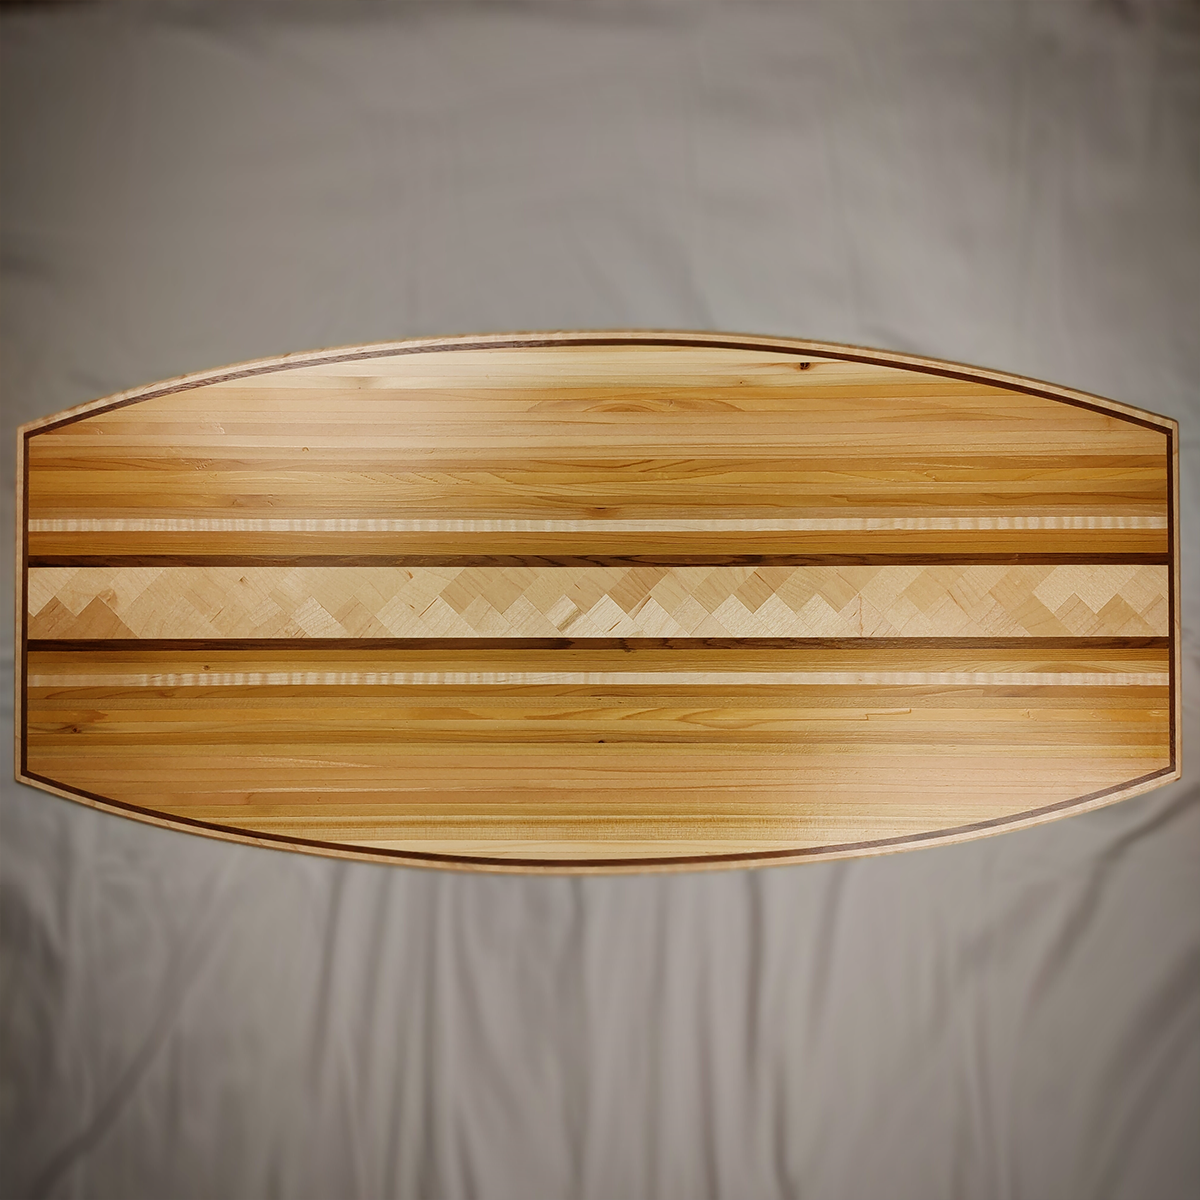 The Original Longboard #1